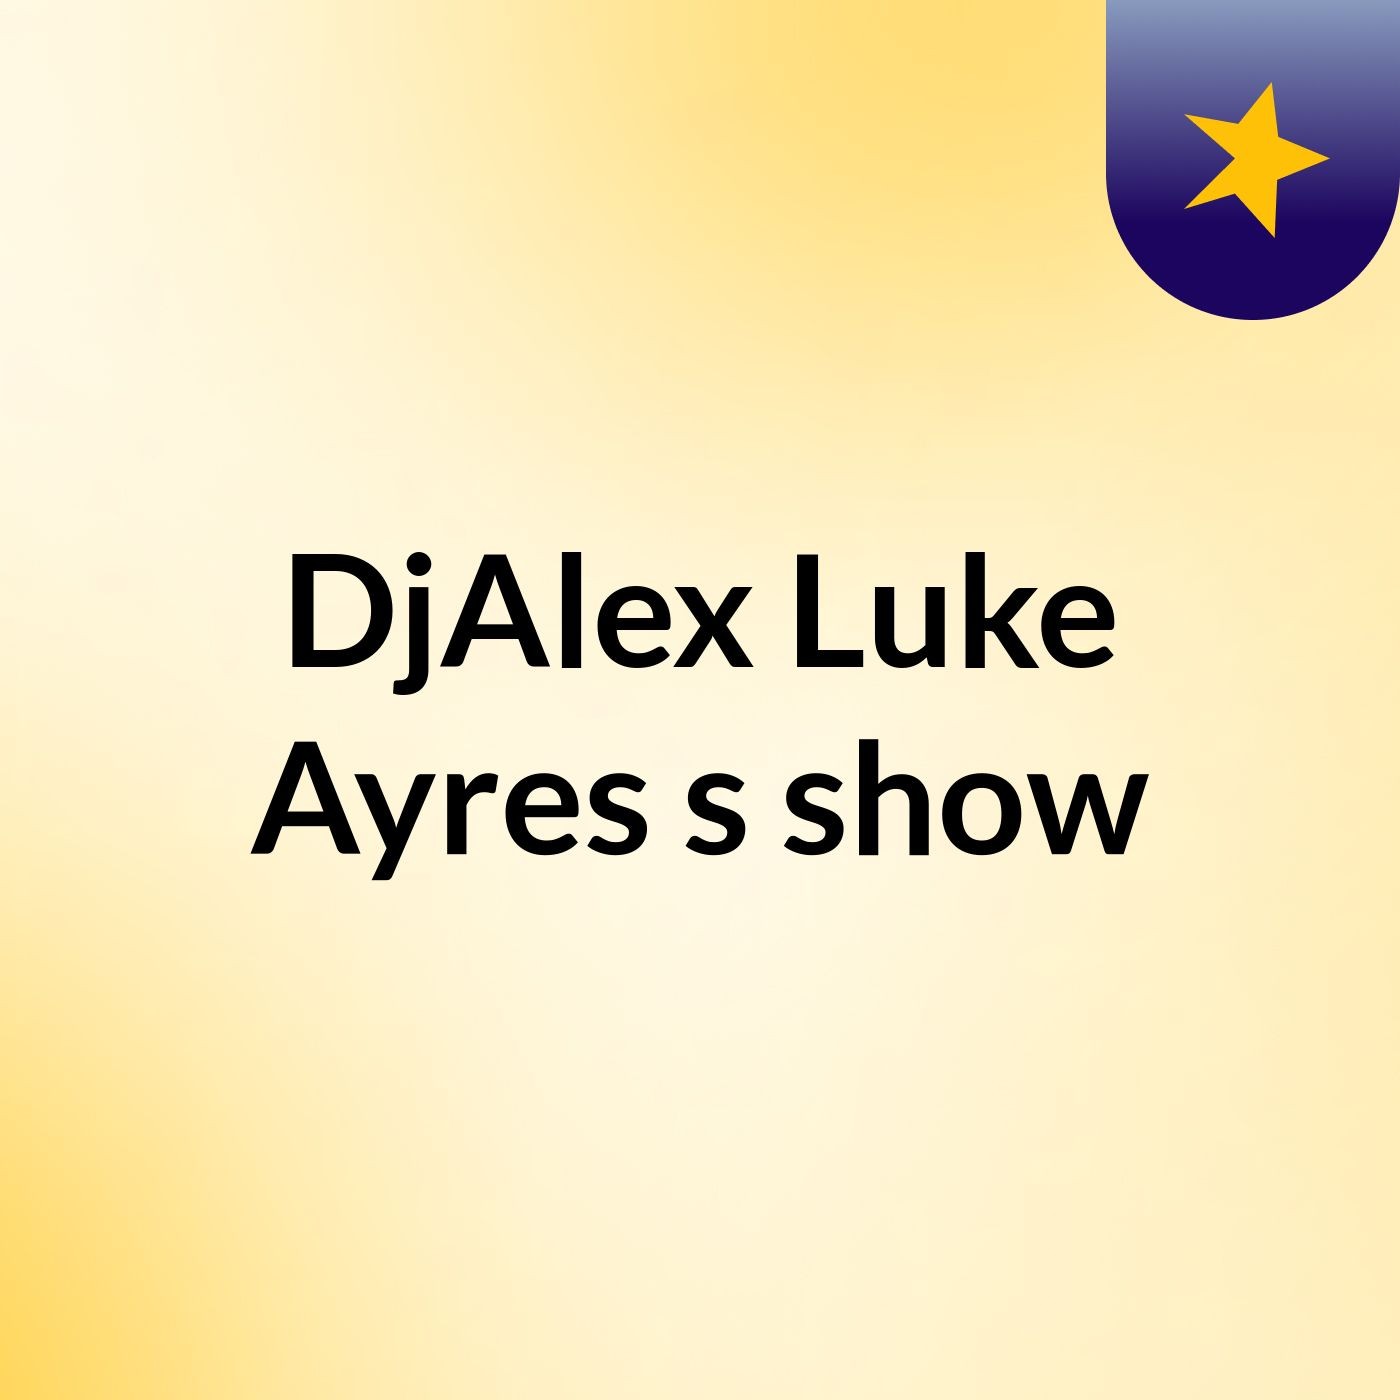 DjAlex Luke Ayres's show